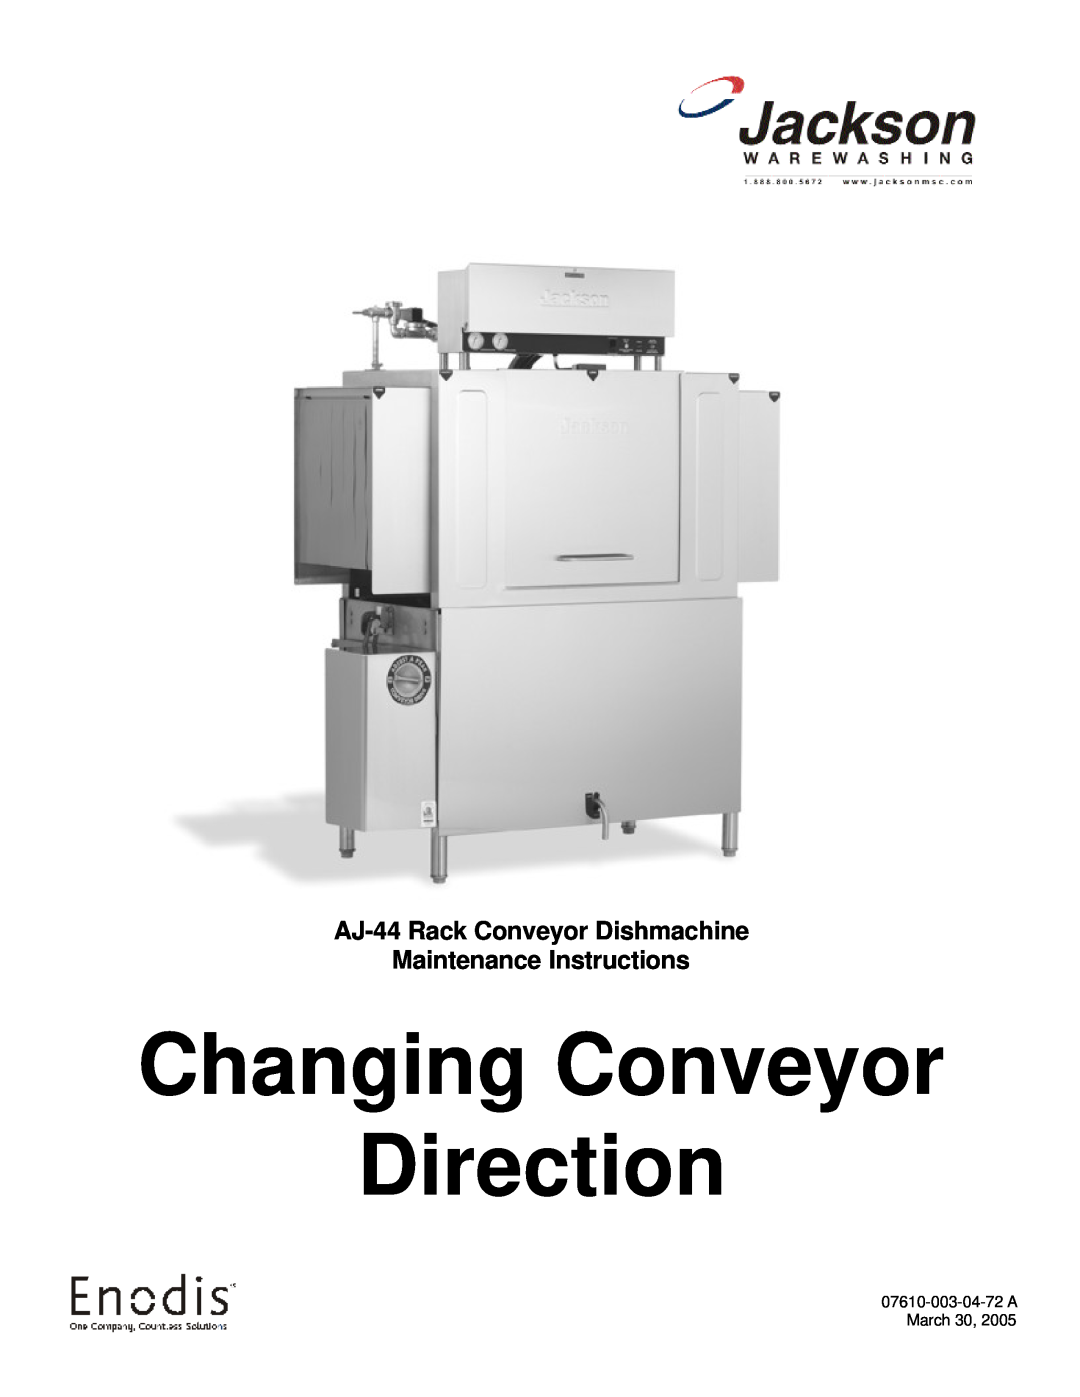 Jackson manual Changing Conveyor Direction, AJ-44Rack Conveyor Dishmachine, Maintenance Instructions 